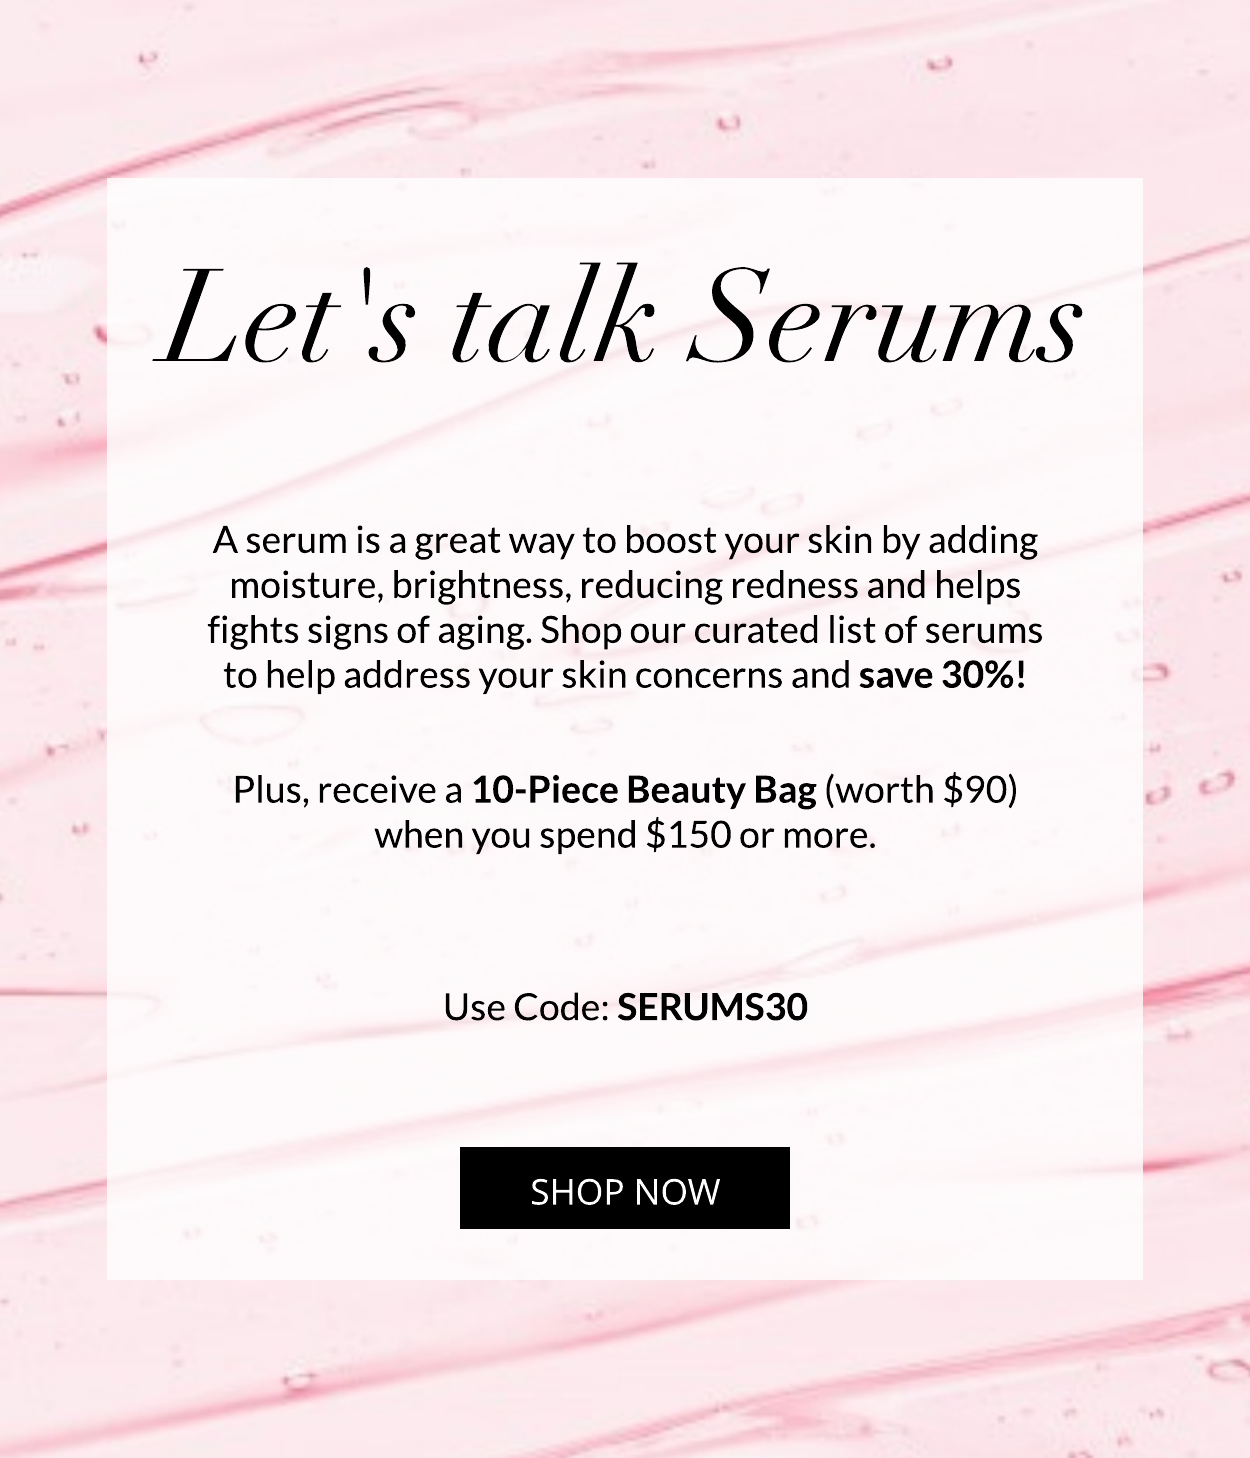 Save 30% on Serums